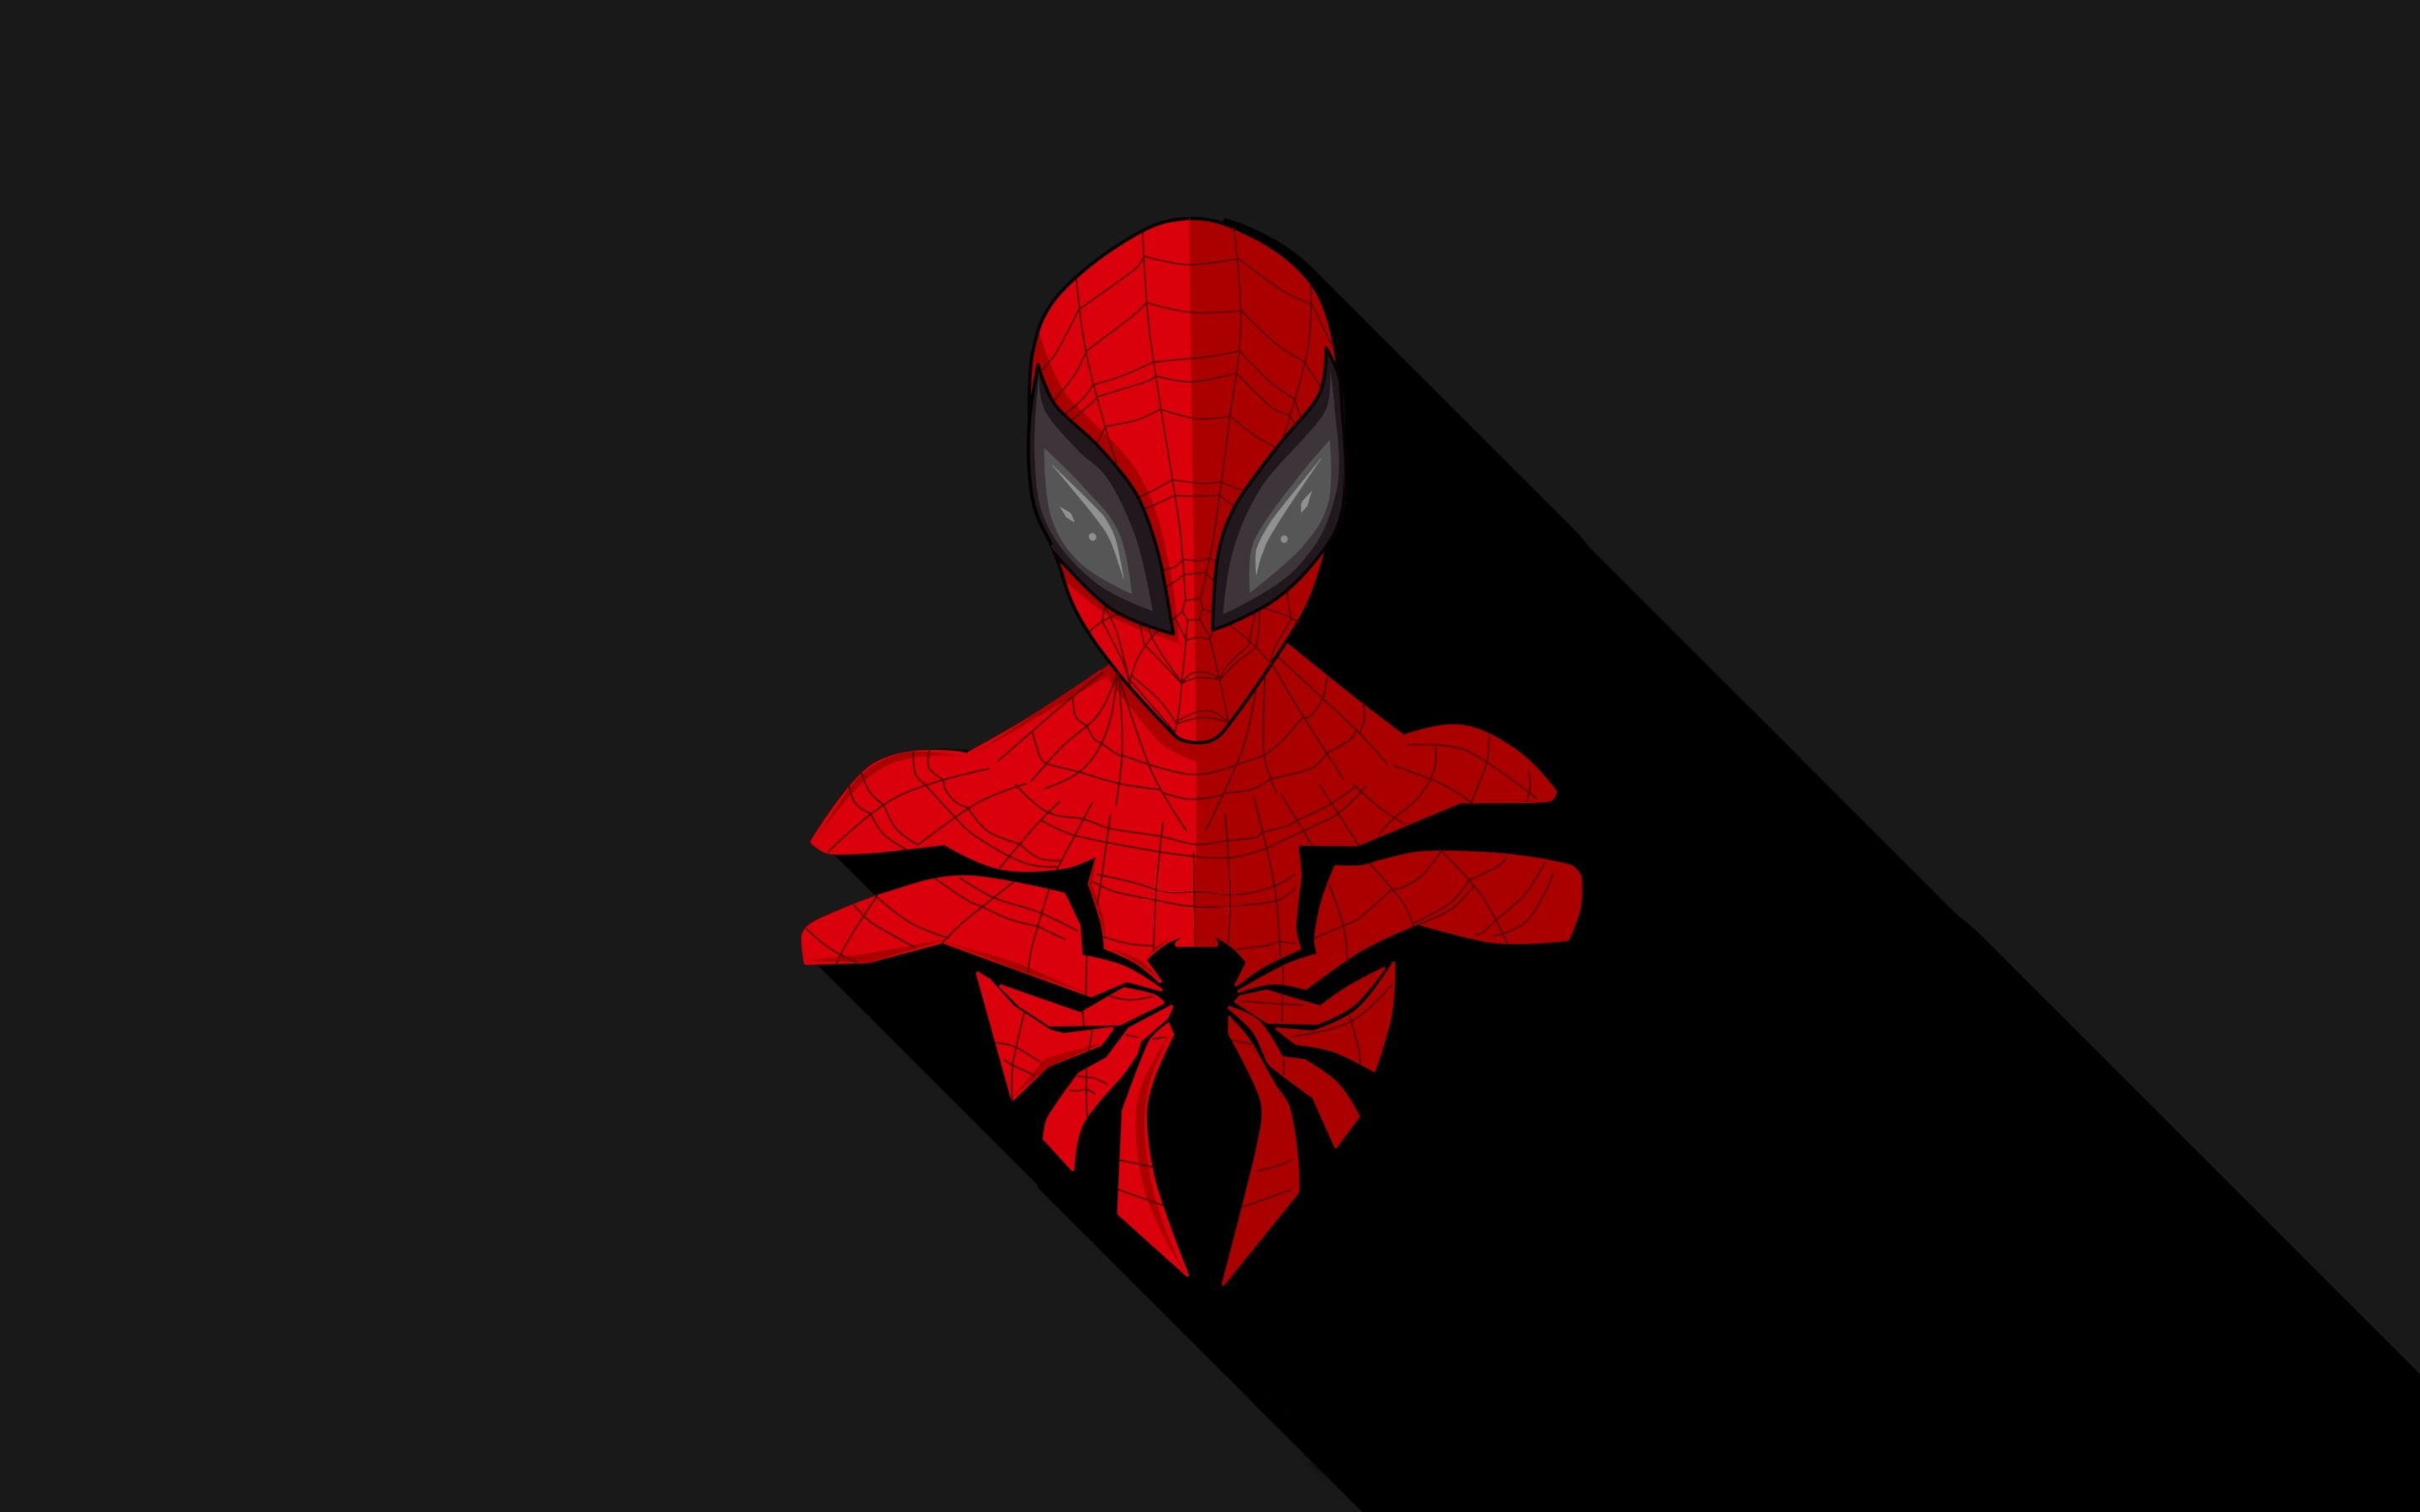 Spider Man Dark Minimal Avengers Macbook Pro Retina Wallpaper, HD Minimalist 4K Wallpaper, Image, Photo And Background